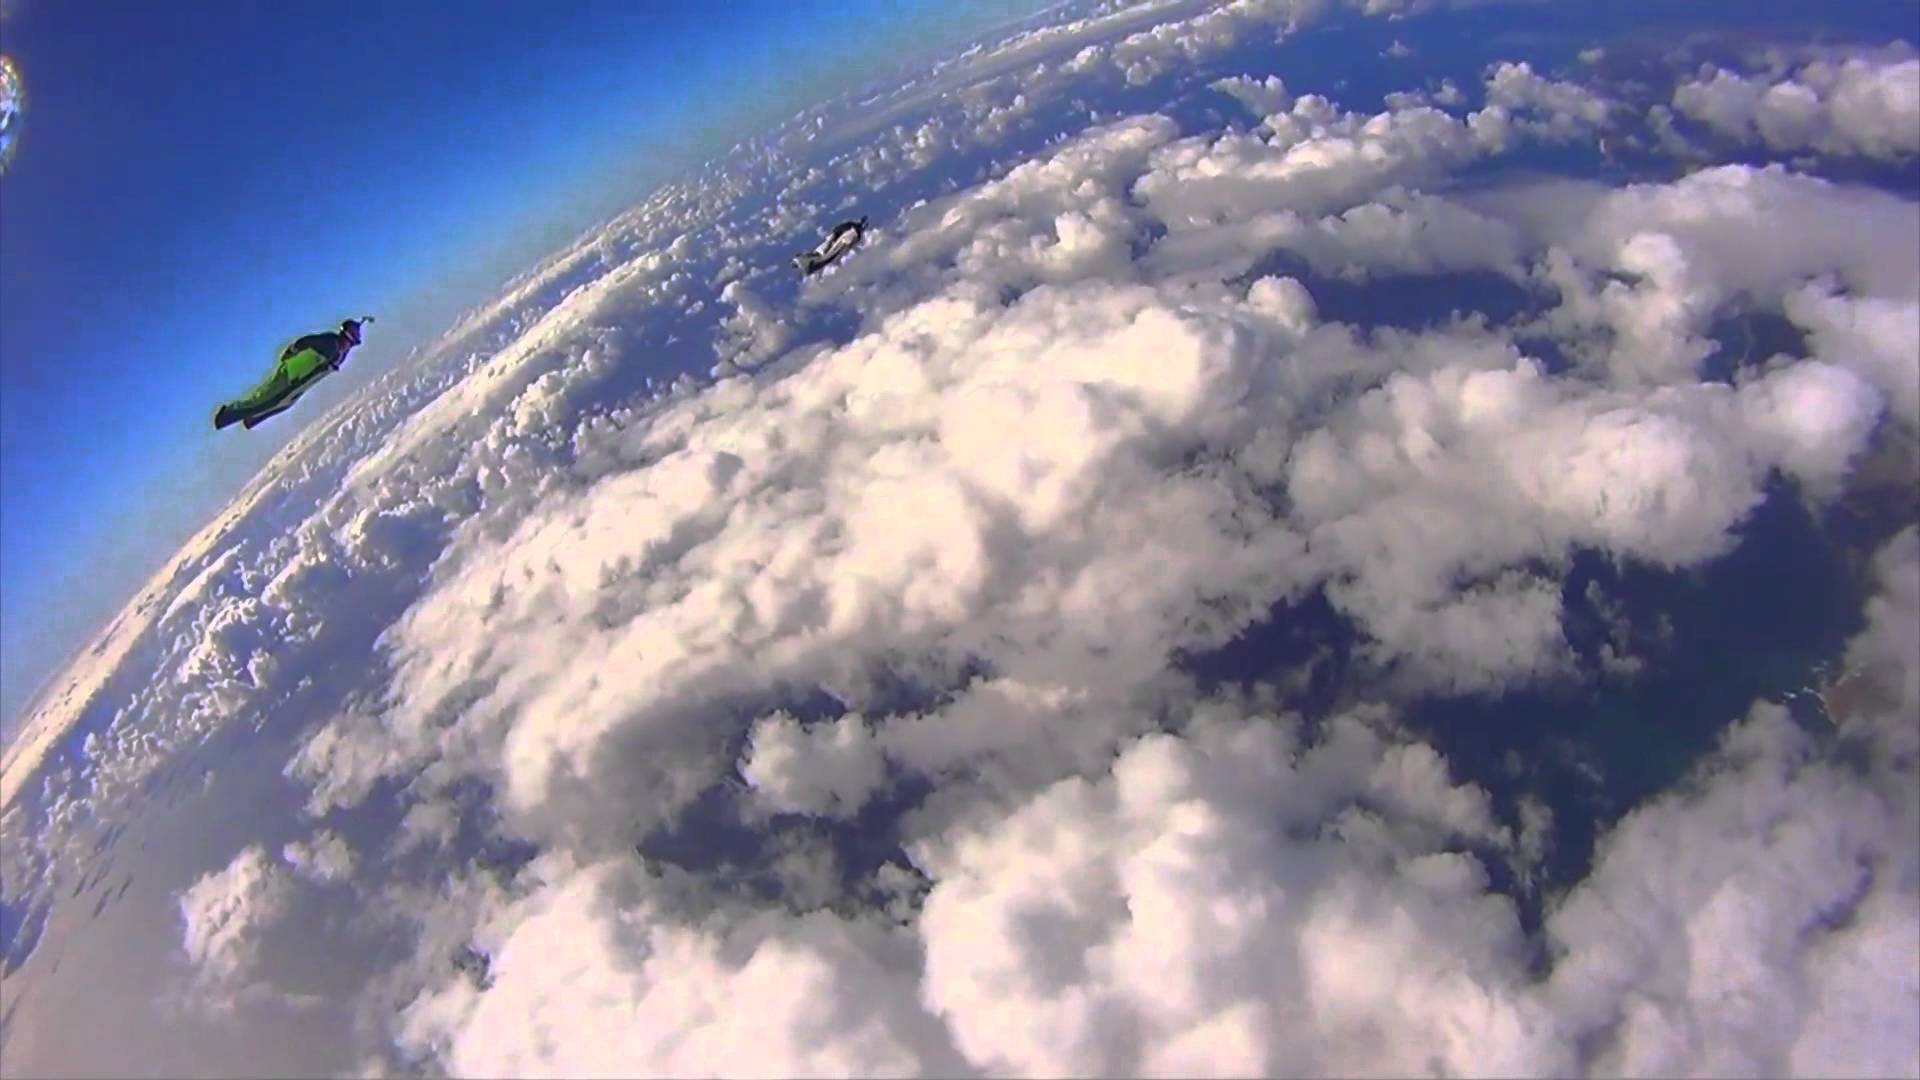 Wingsuit Racing Human Flight At 140mph